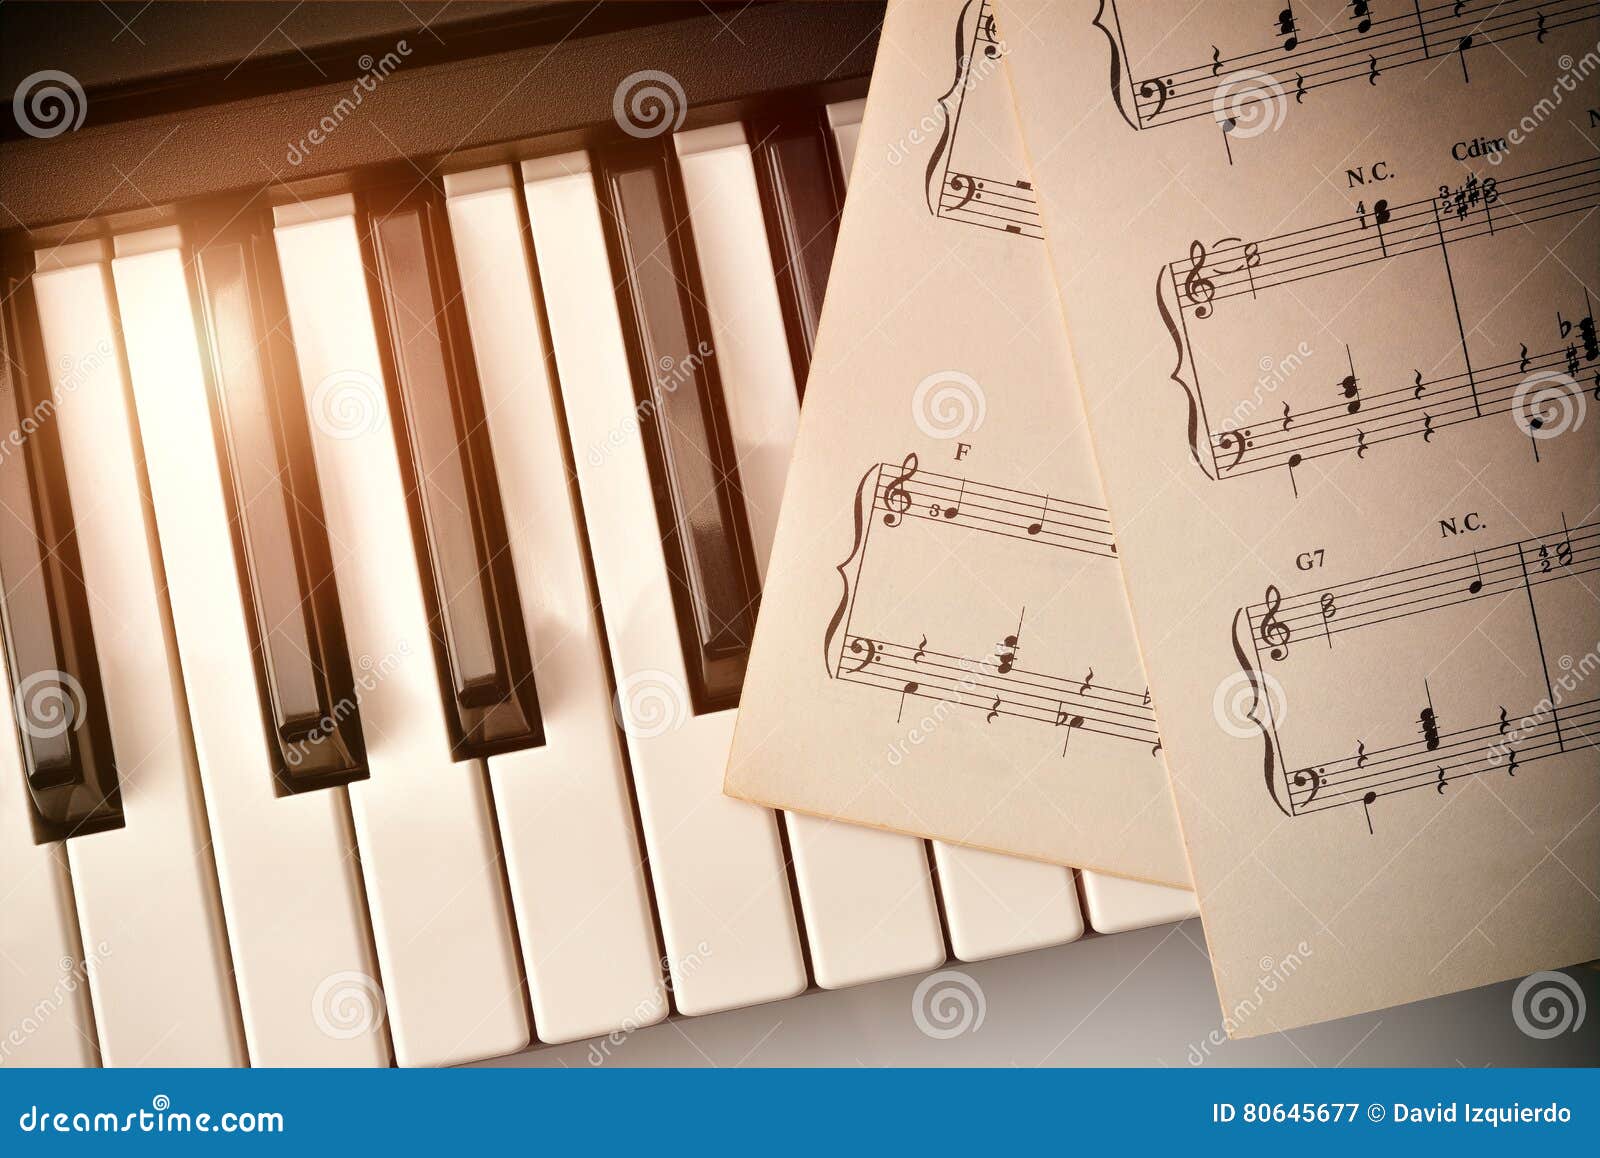 golden piano keyboard